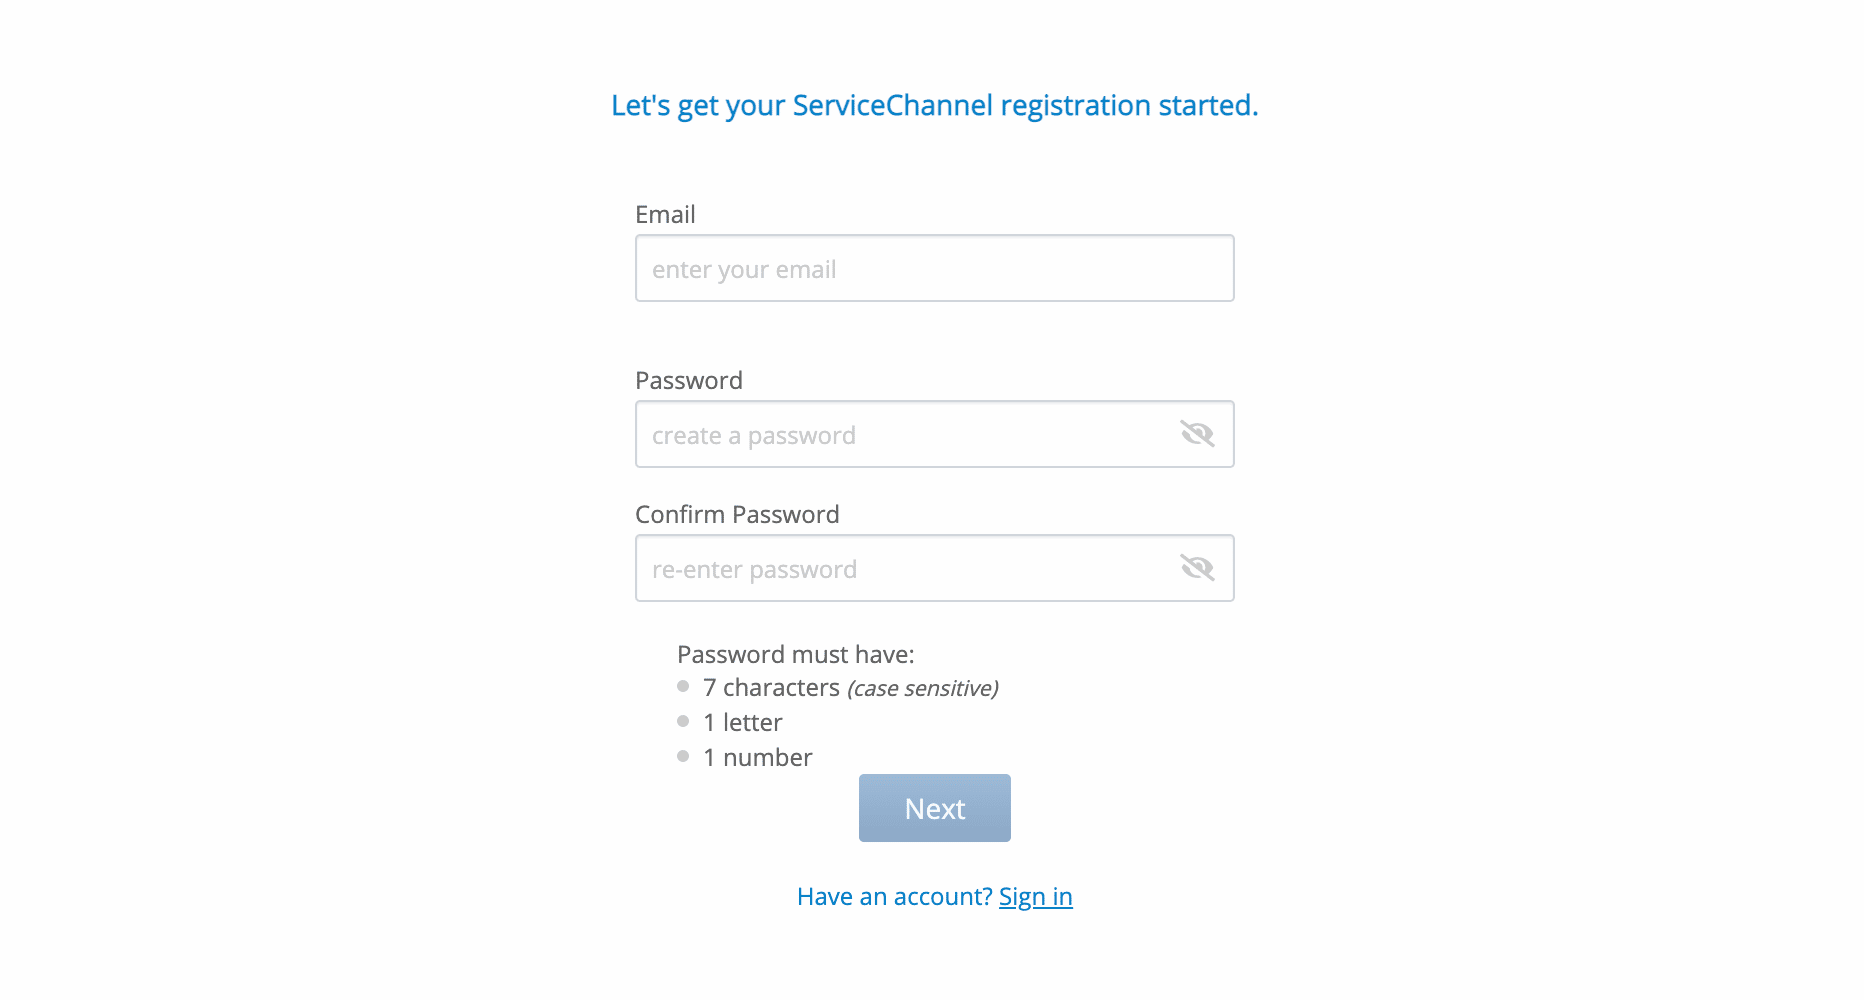 servicechannel account registration starting screen within platform